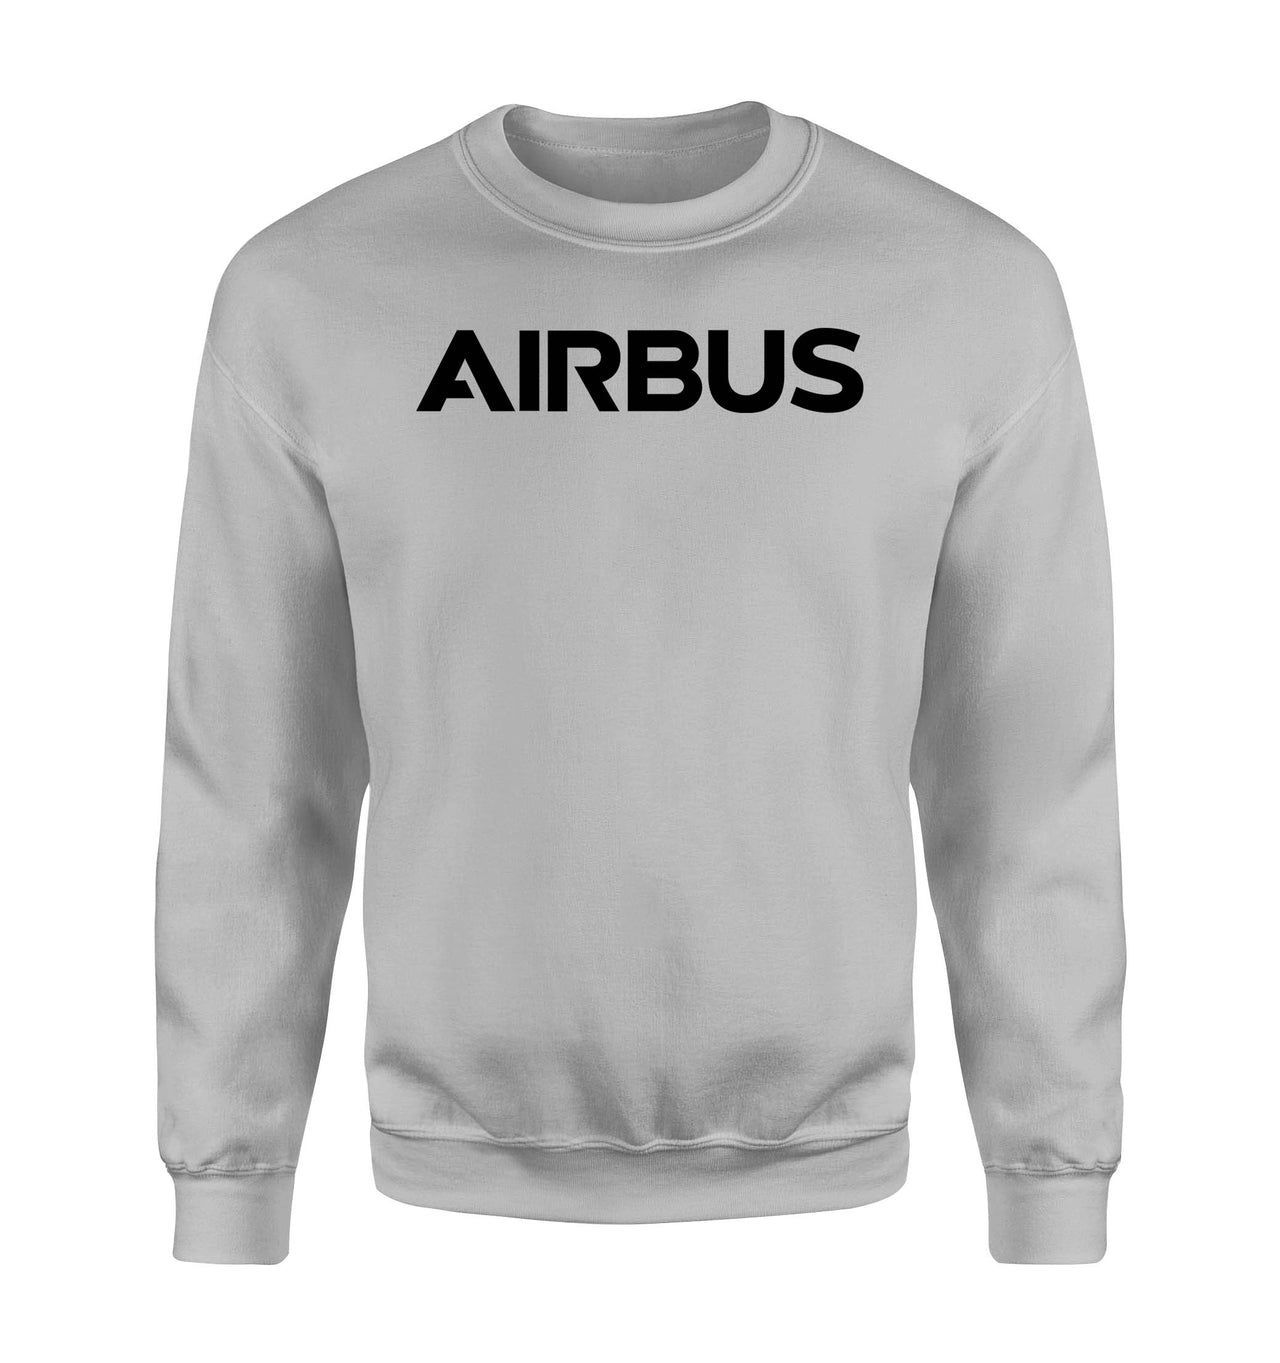 Airbus & Text Designed Sweatshirts